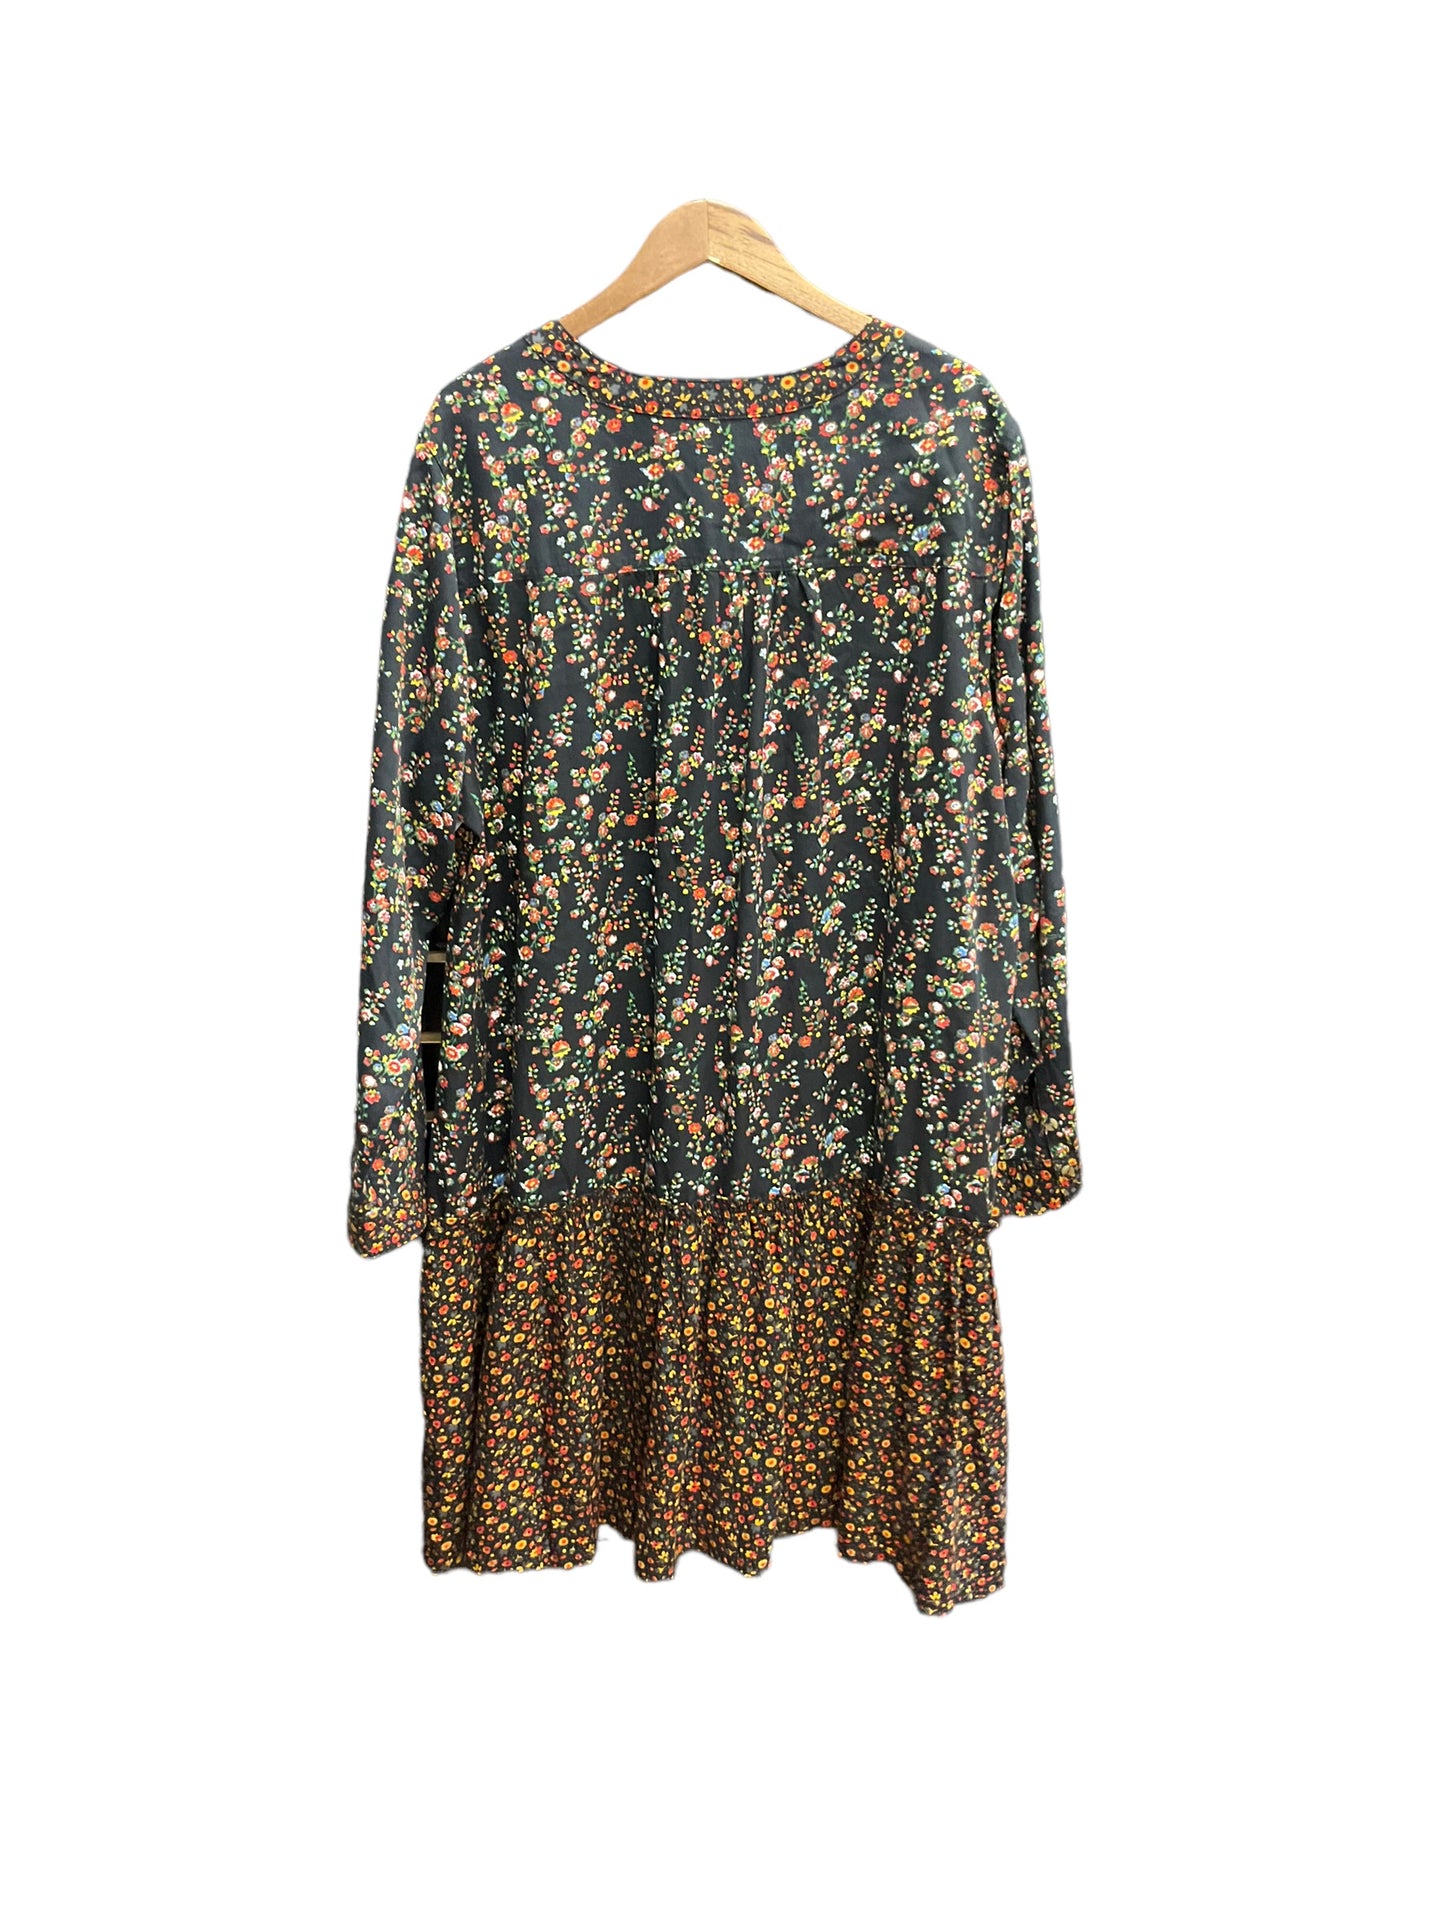 Dress Casual Midi By Maeve  Size: 2x